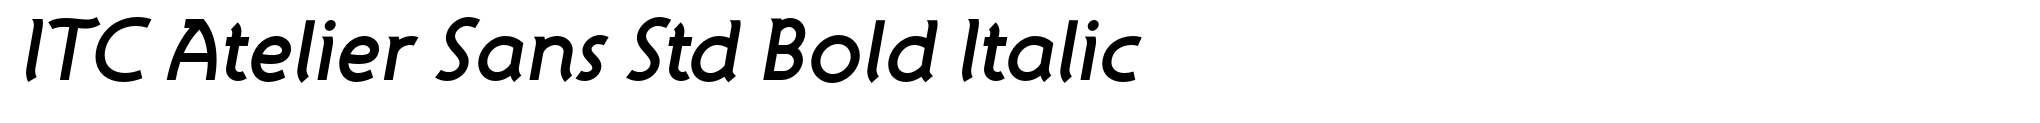 ITC Atelier Sans Std Bold Italic image